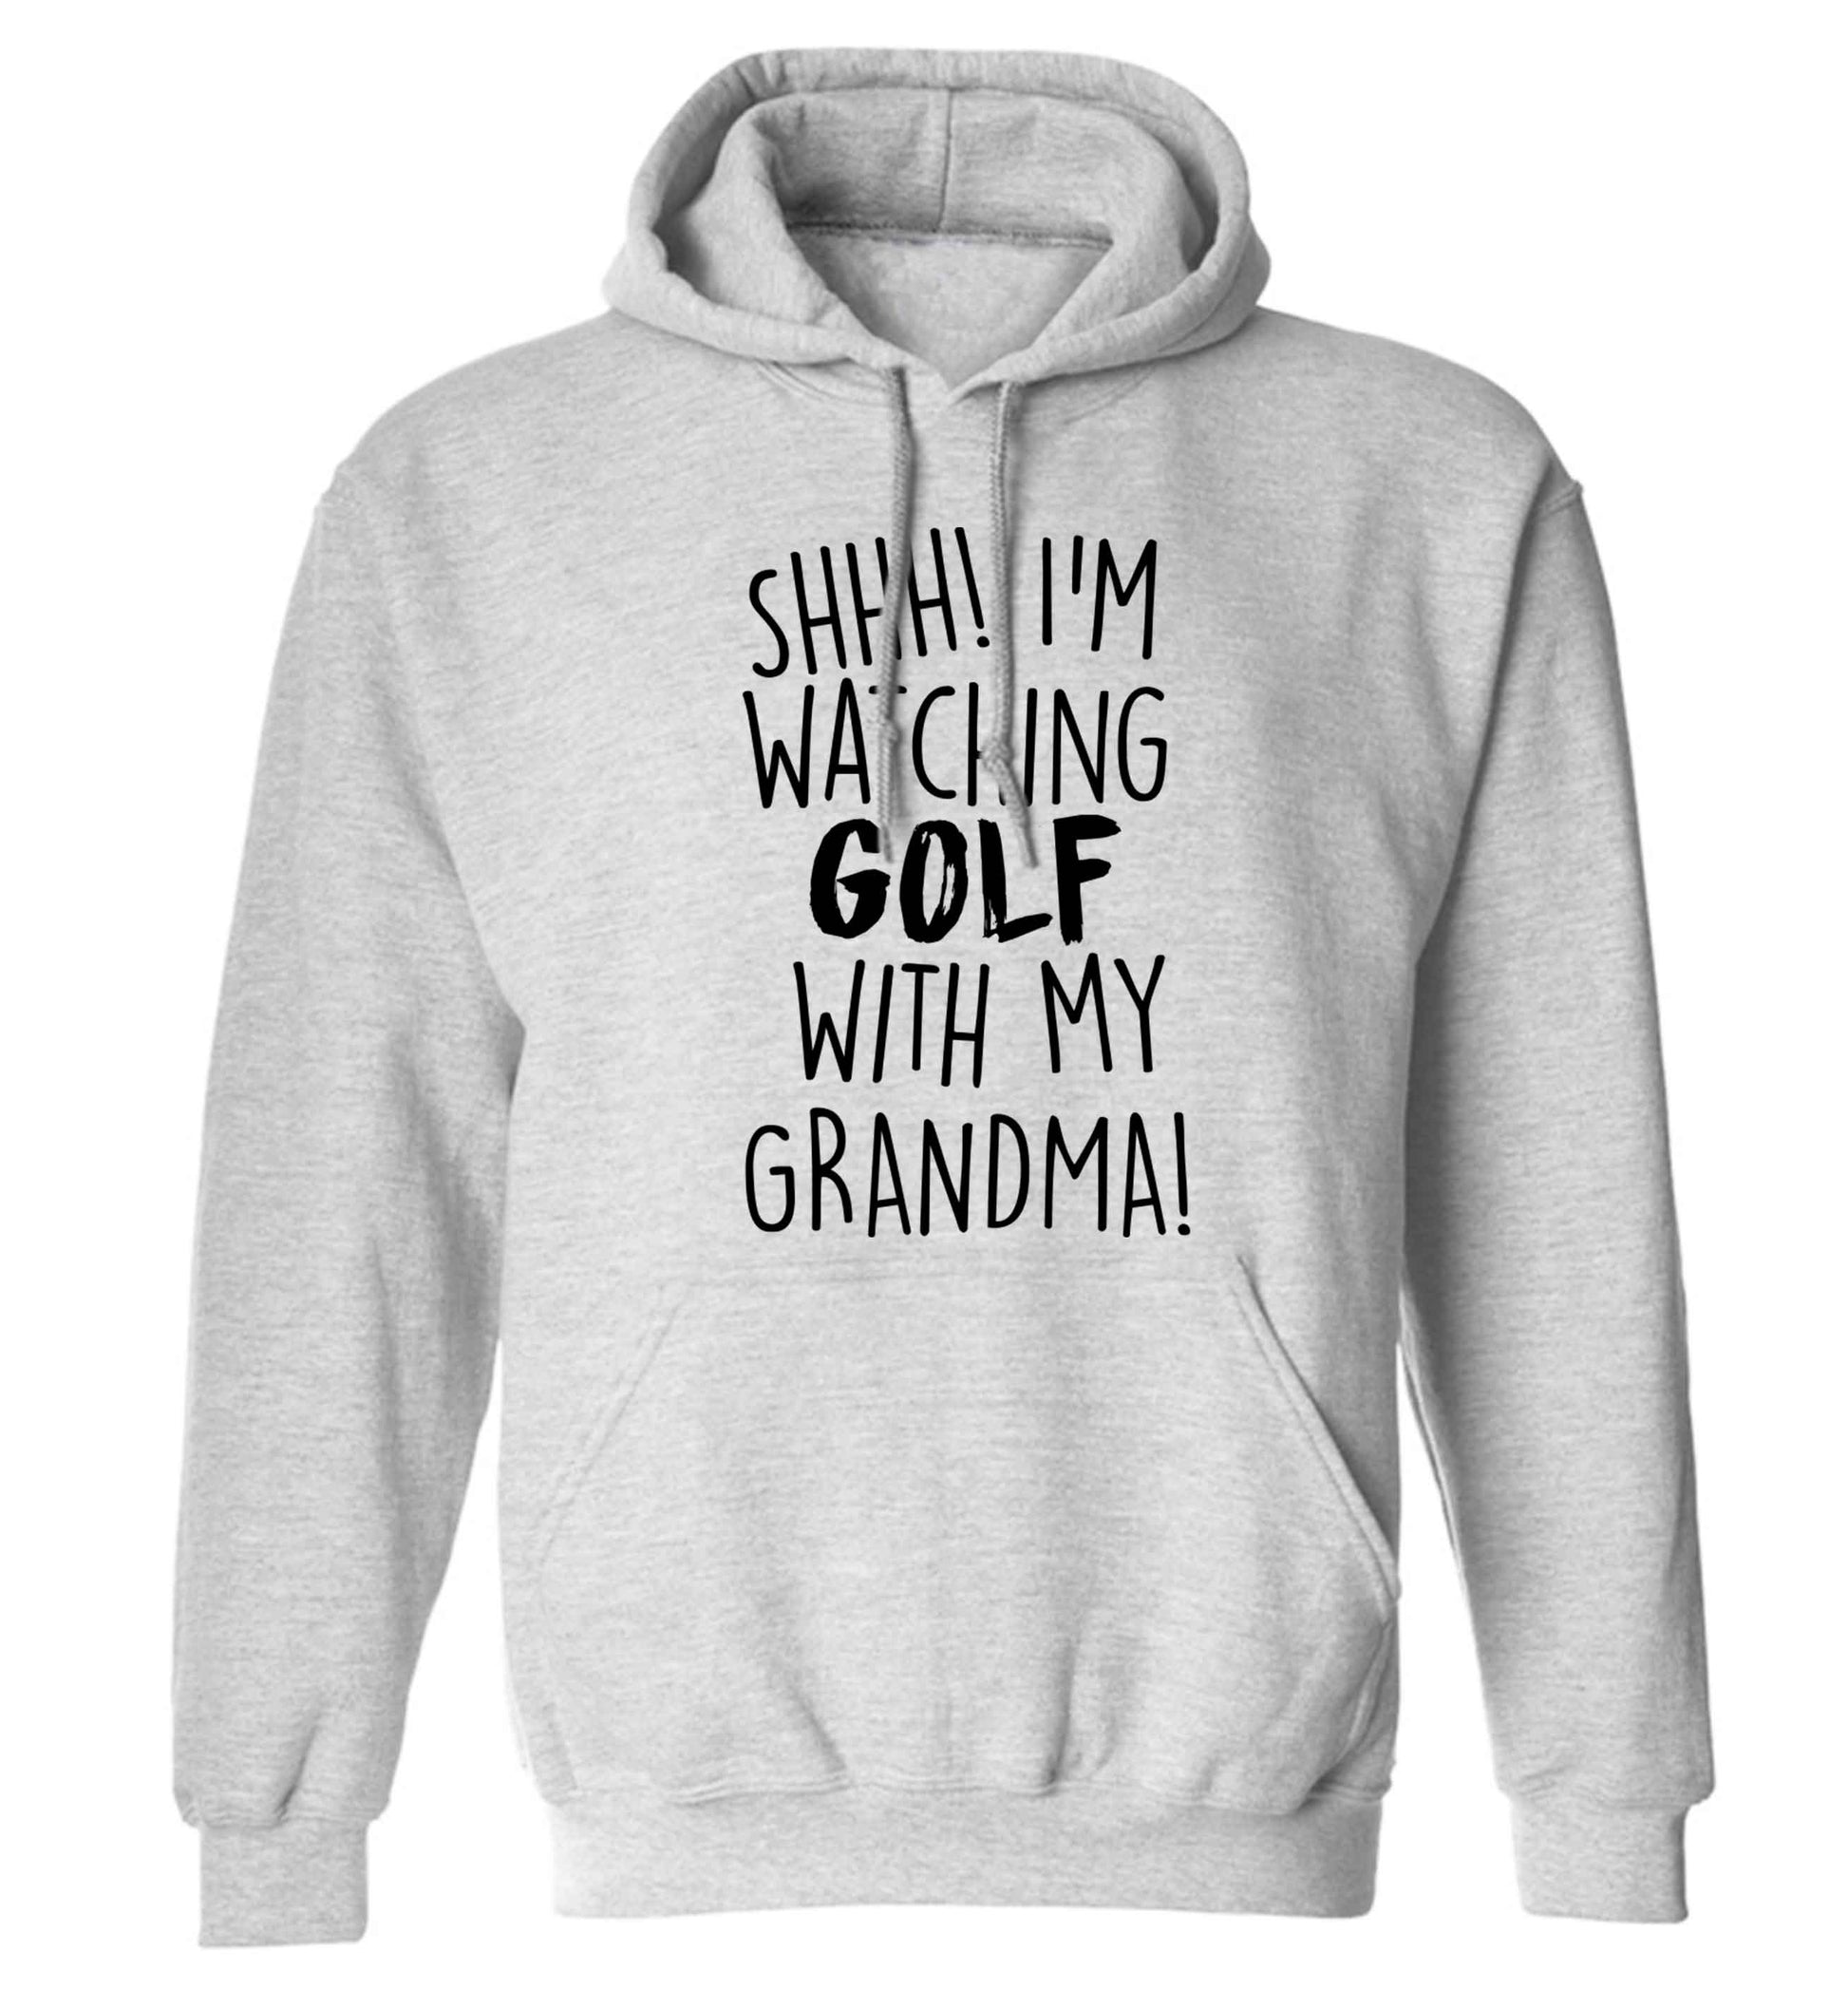 Shh I'm watching golf with my grandma adults unisex grey hoodie 2XL